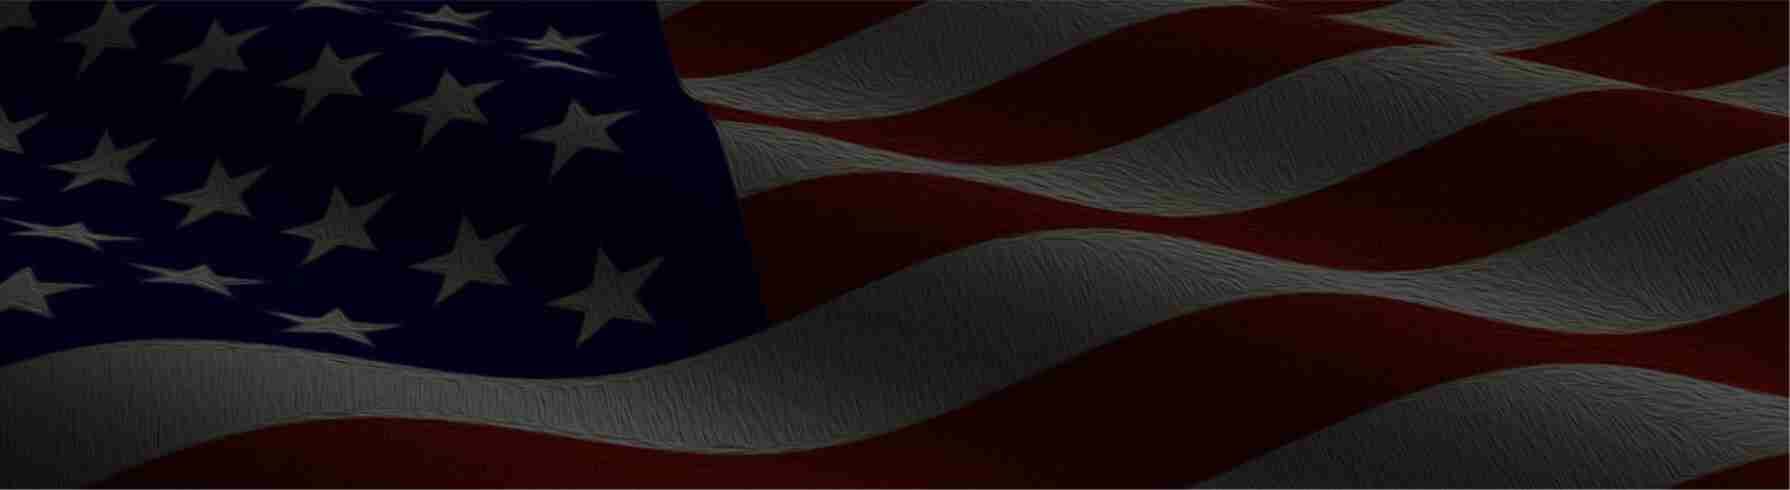 blackened image of American flag